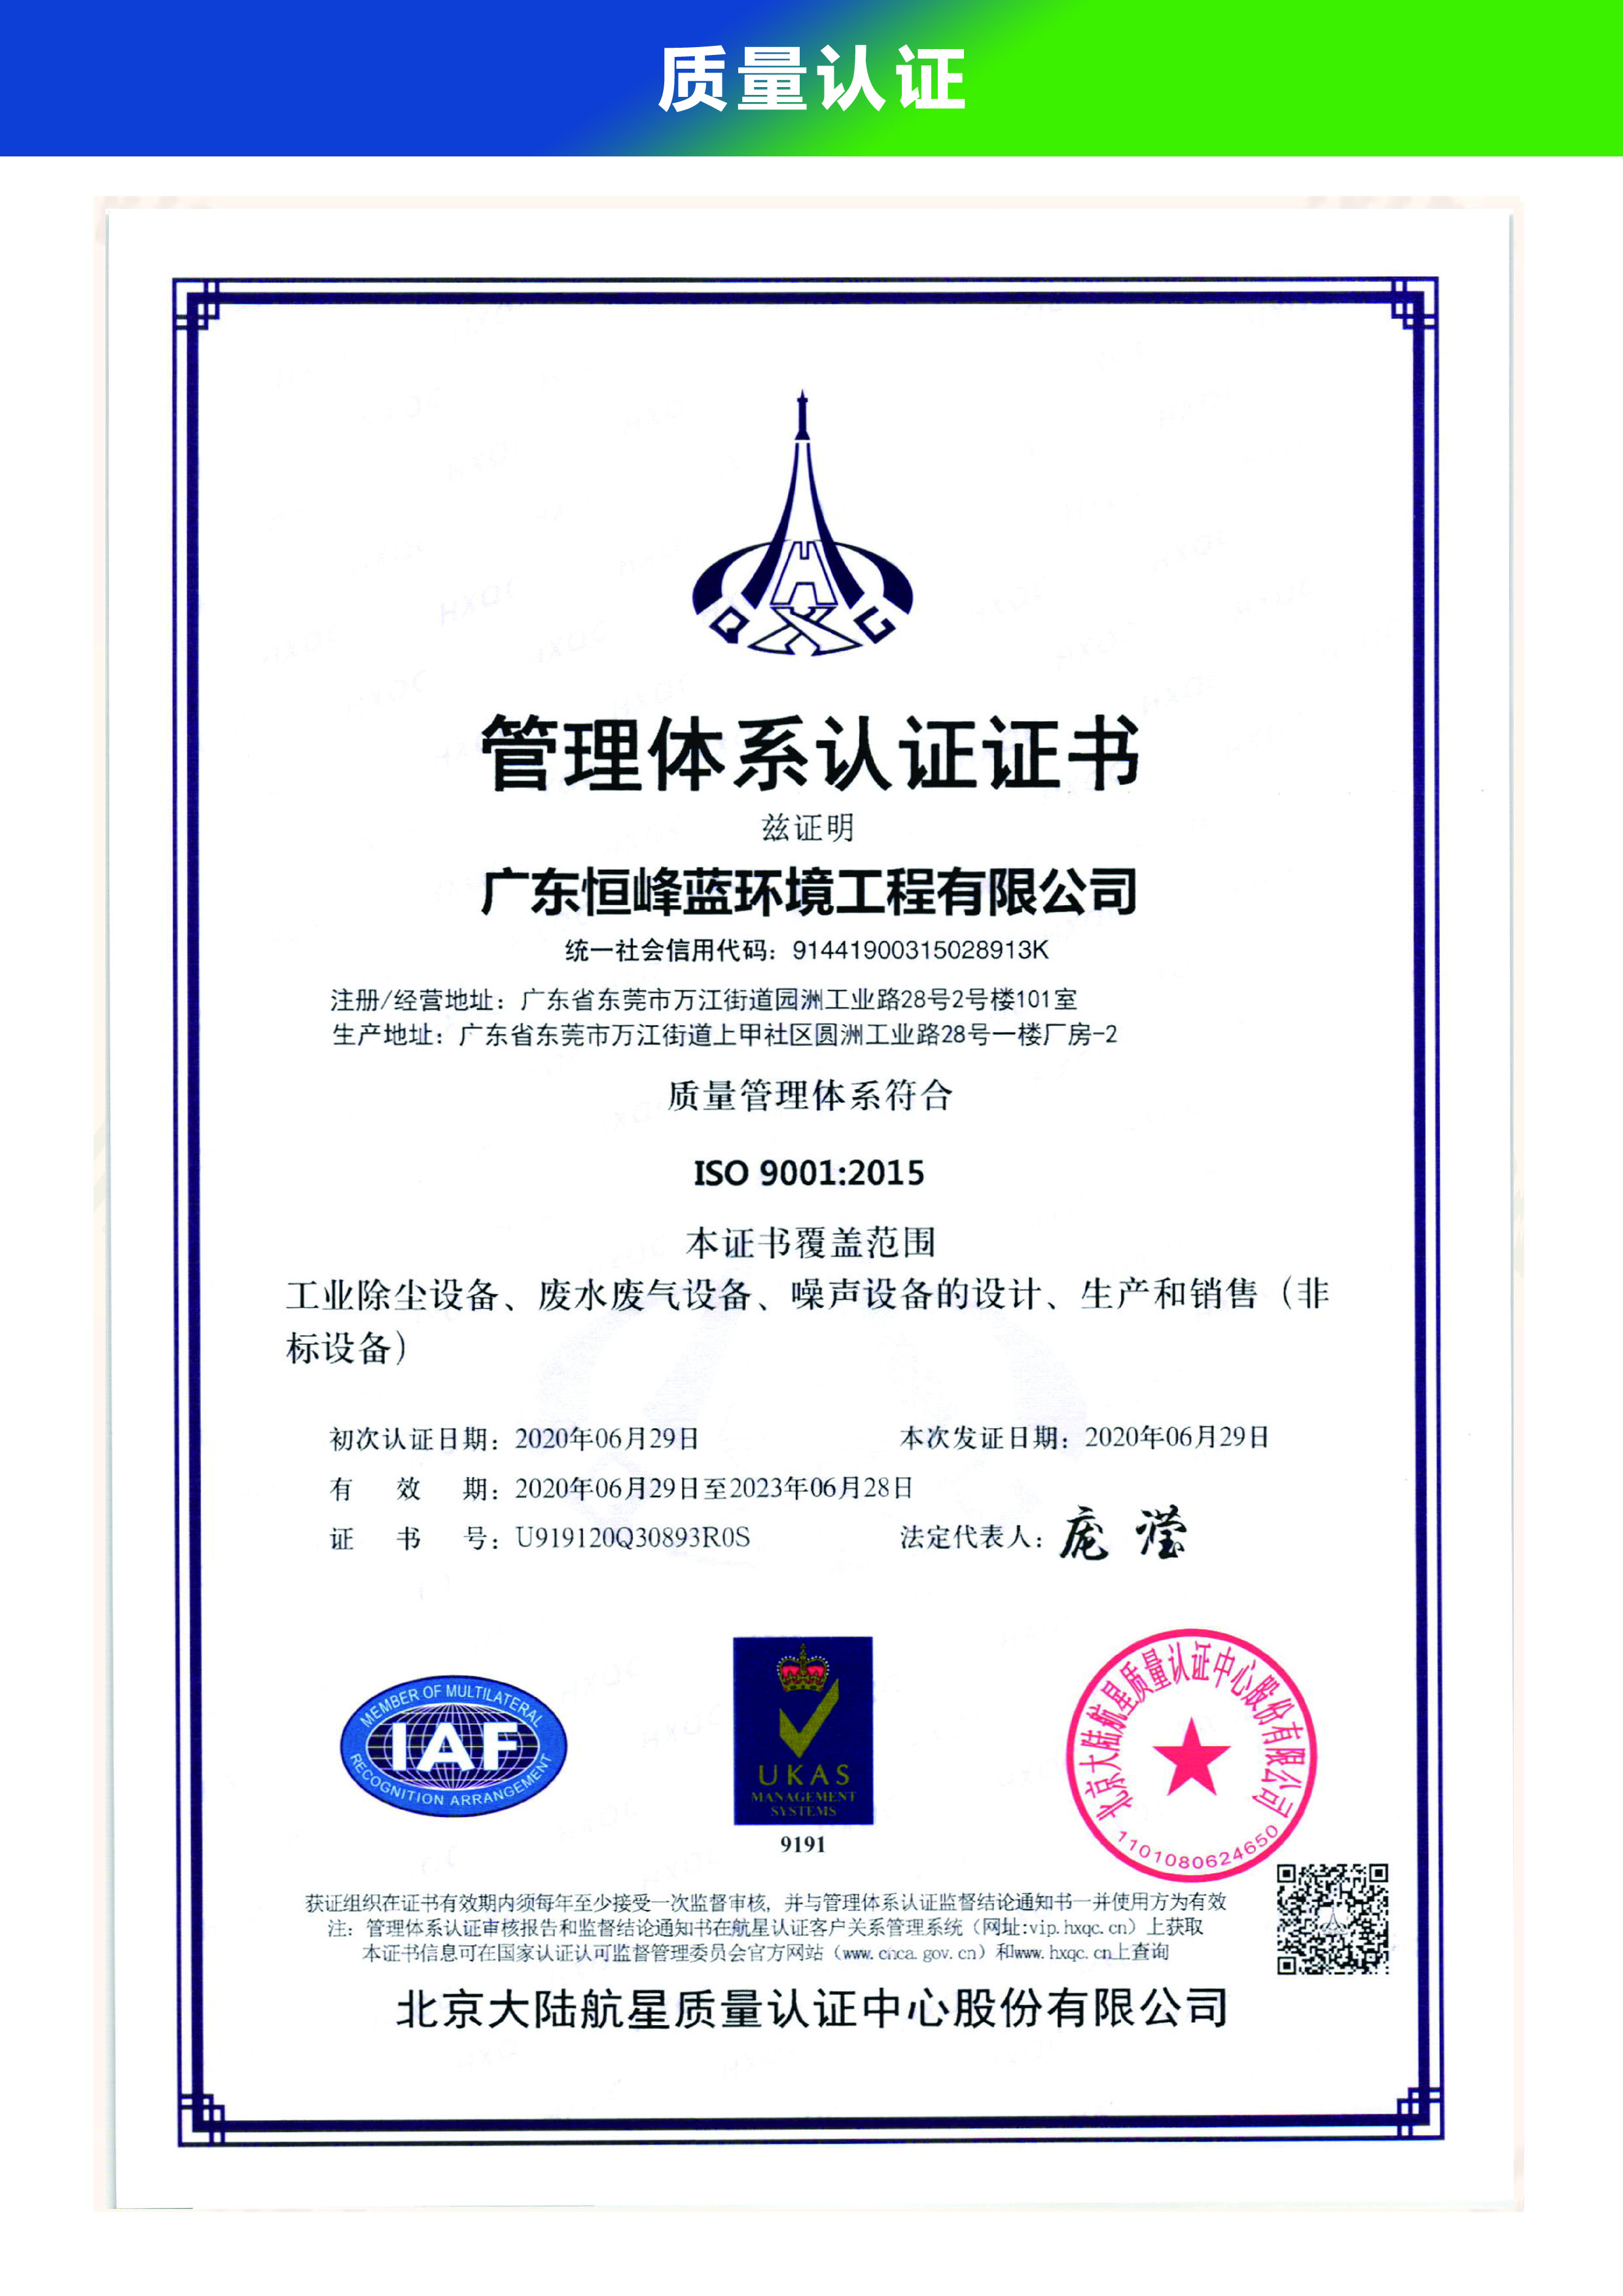  质量管理体系ISO9001认证